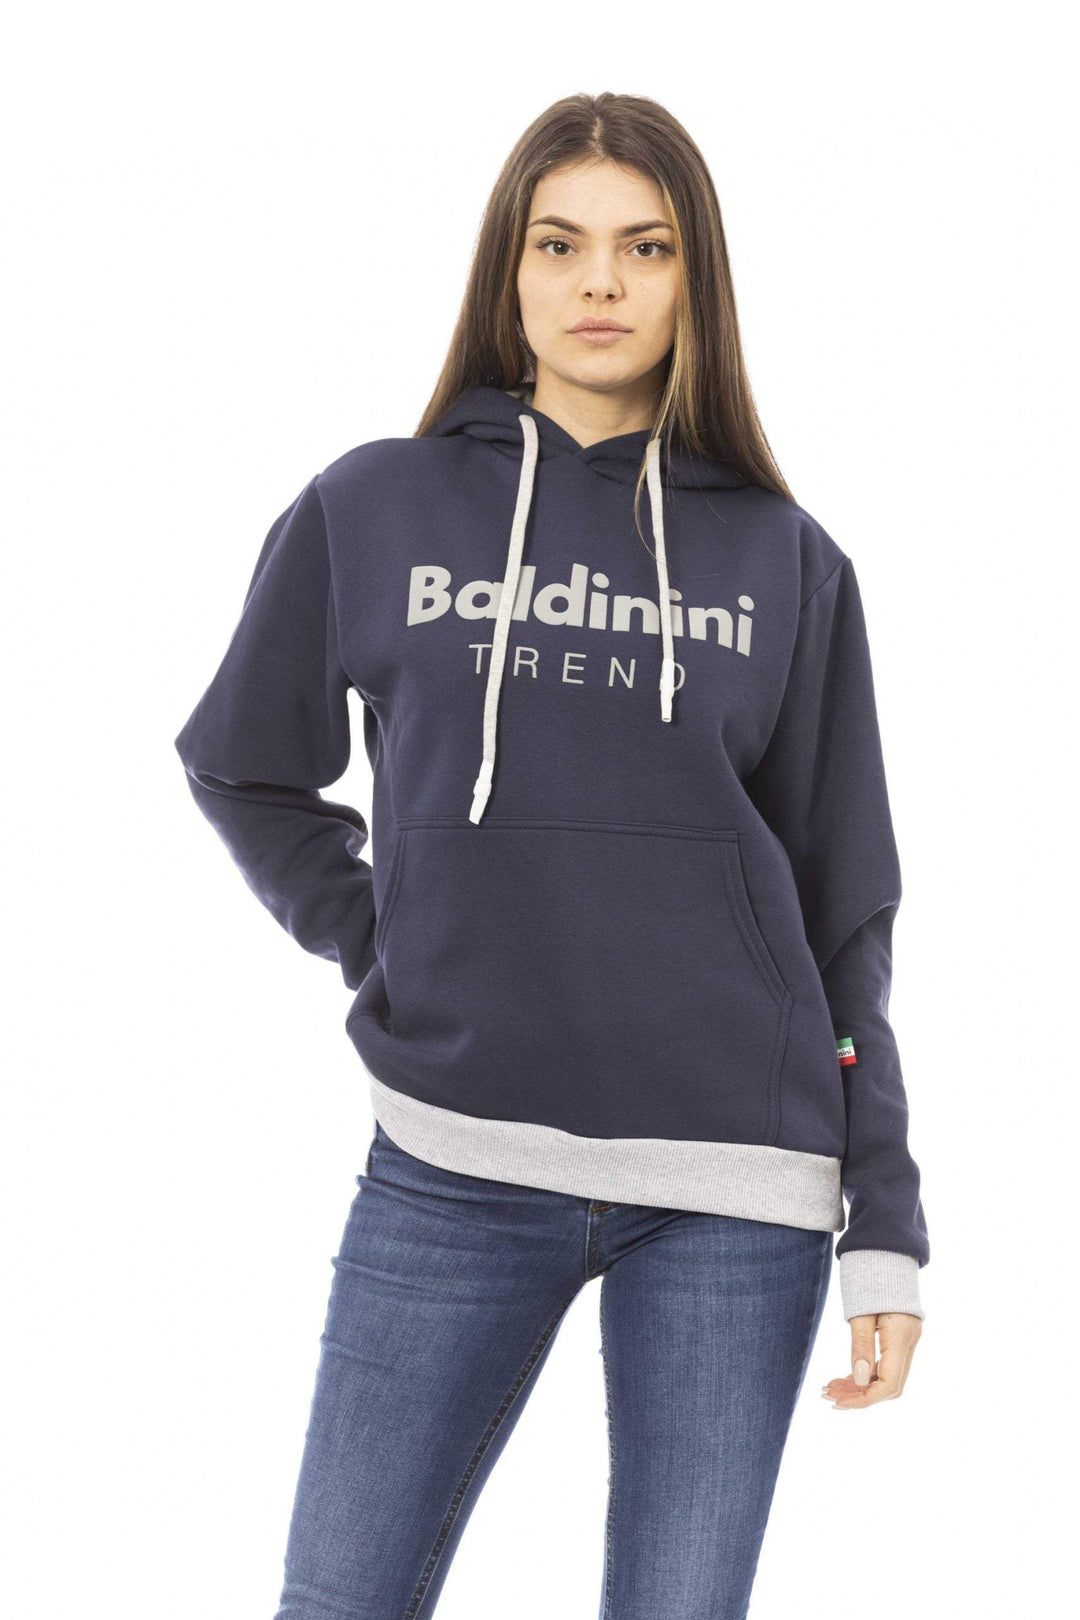 Baldinini Trend Blue Cotton Sweater Baldinini Trend, Blue, feed-1, L, M, S, Sweaters - Women - Clothing, XL, XXL at SEYMAYKA